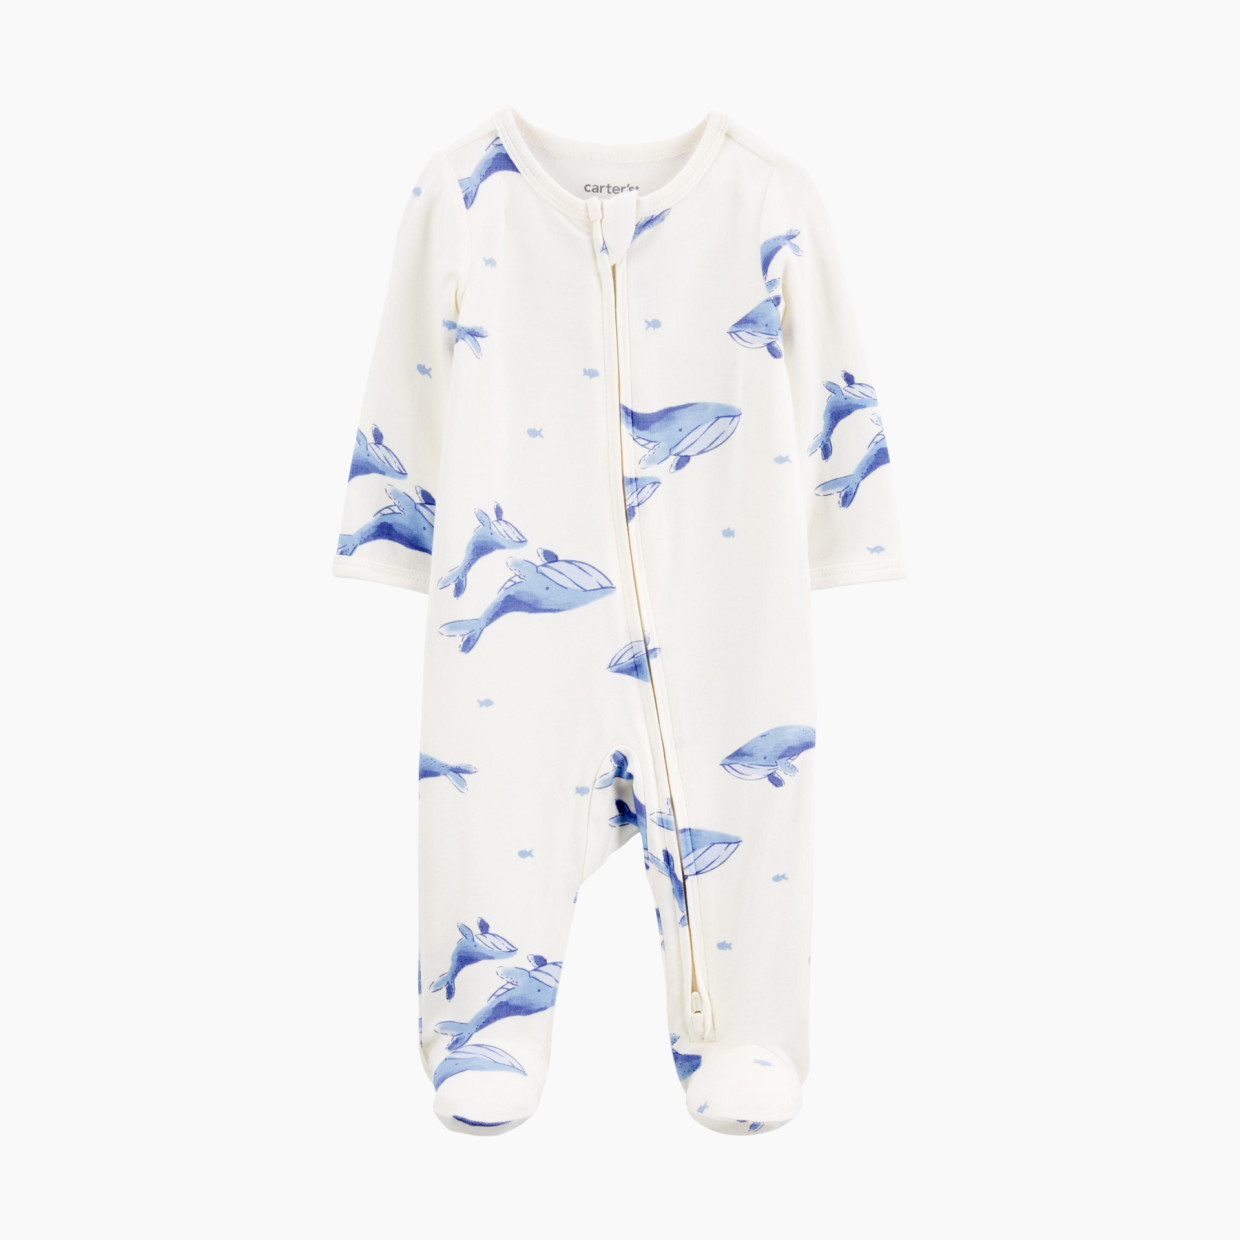 Carter's 2-Way Zip Lenzing Ecovera Sleep & Play Pajamas - Ivory/Blue, 6 M.